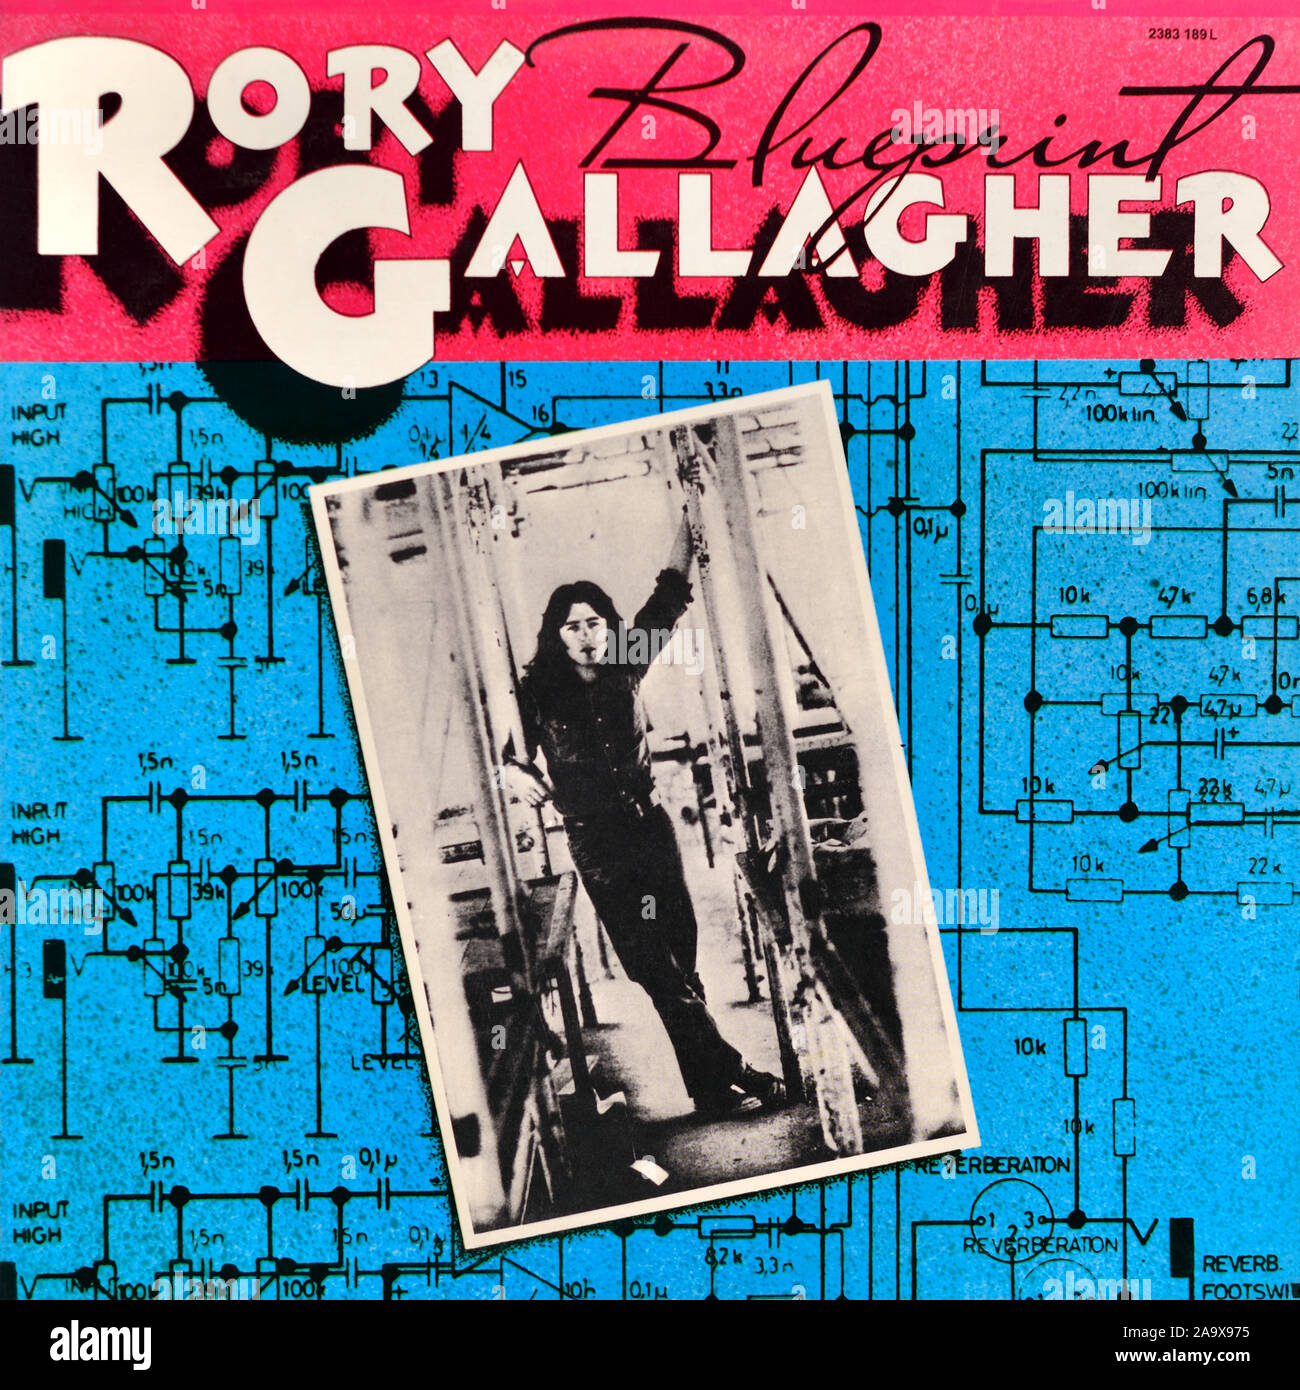 Rory Gallagher - original Vinyl Album Cover - Blueprint - 1973 Stockfoto